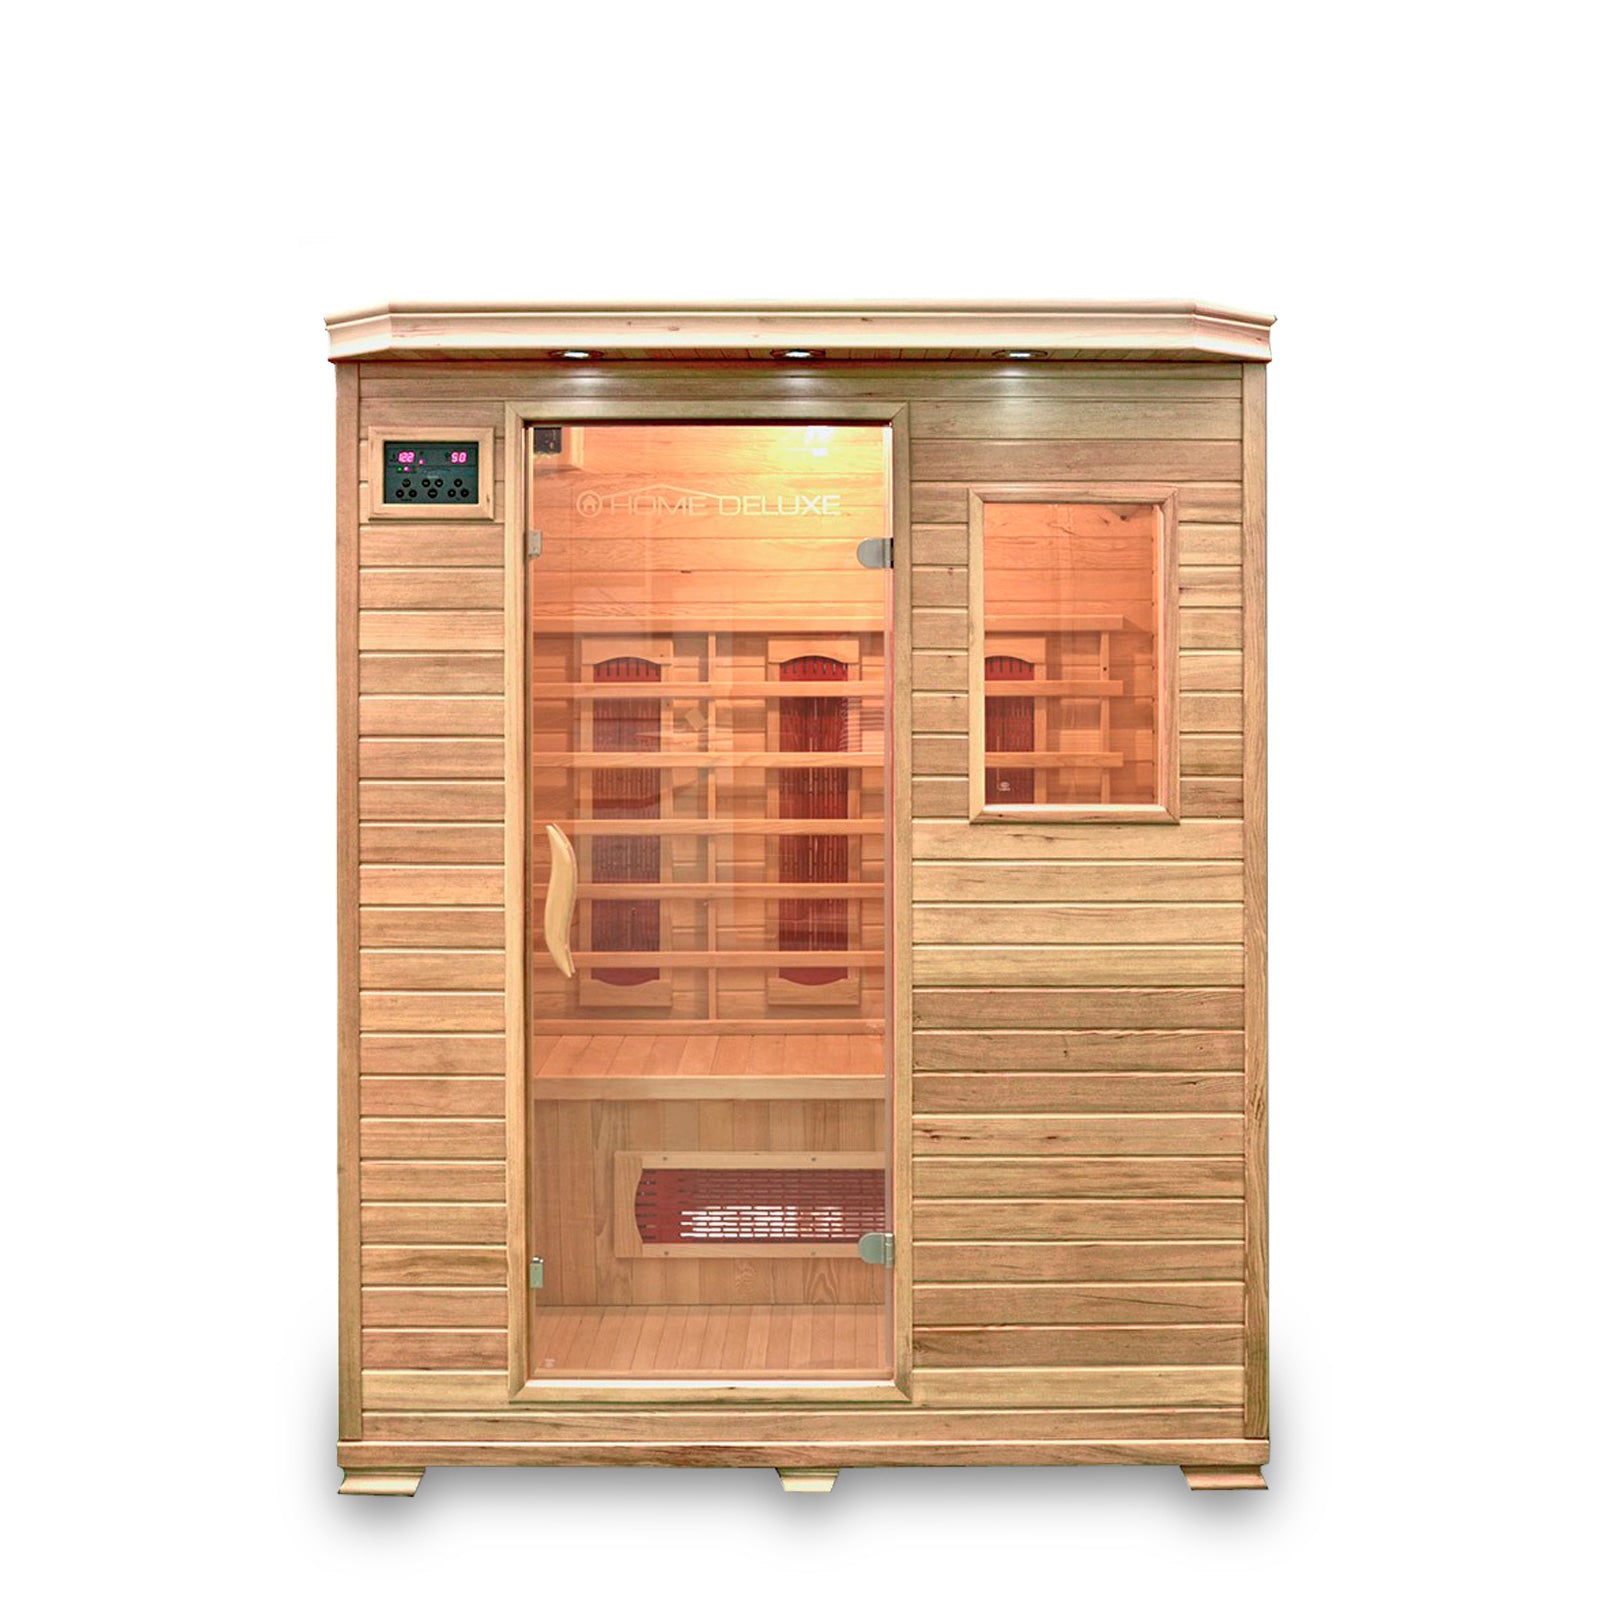 sauna na podczerwień sauna tanio sauna warszawa